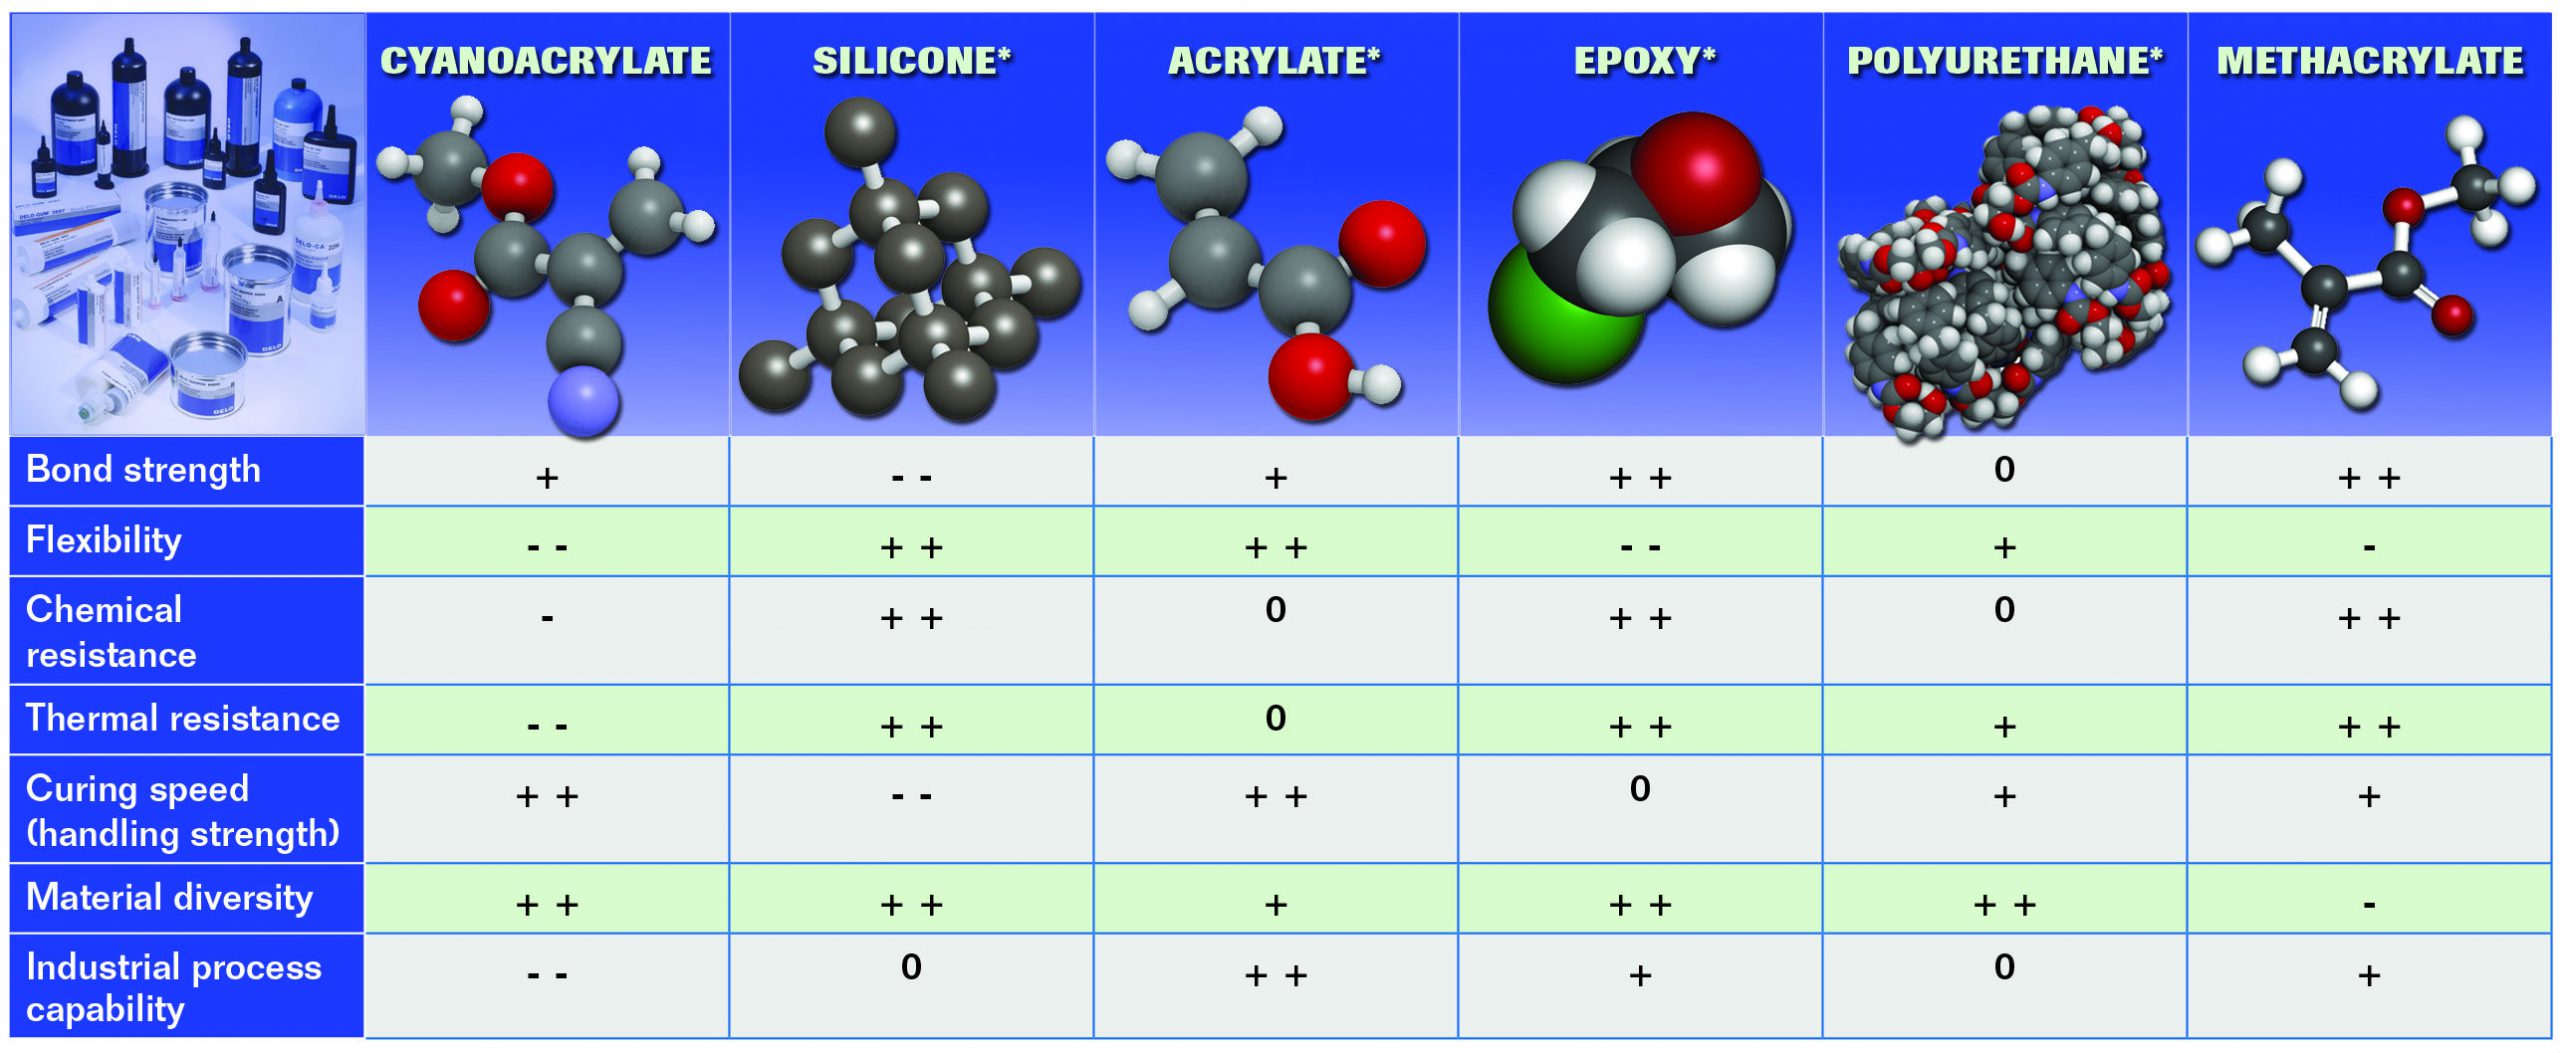 SikoBV | DELO adhesives products